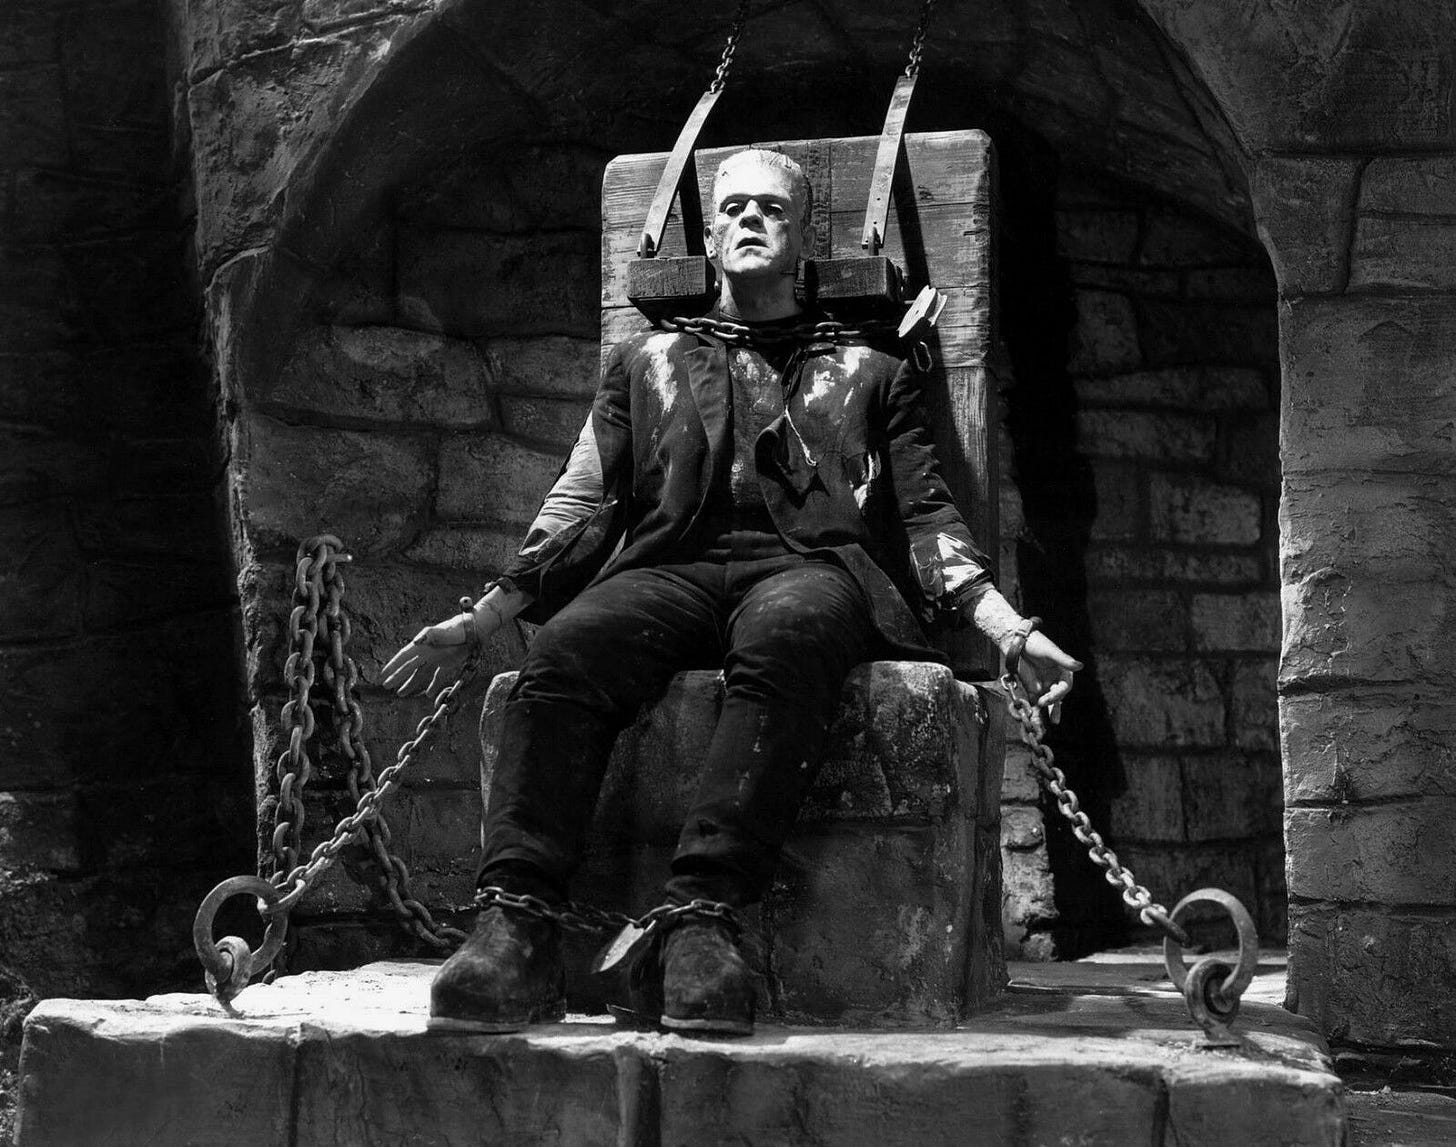 Frankenstein's Monster in chains